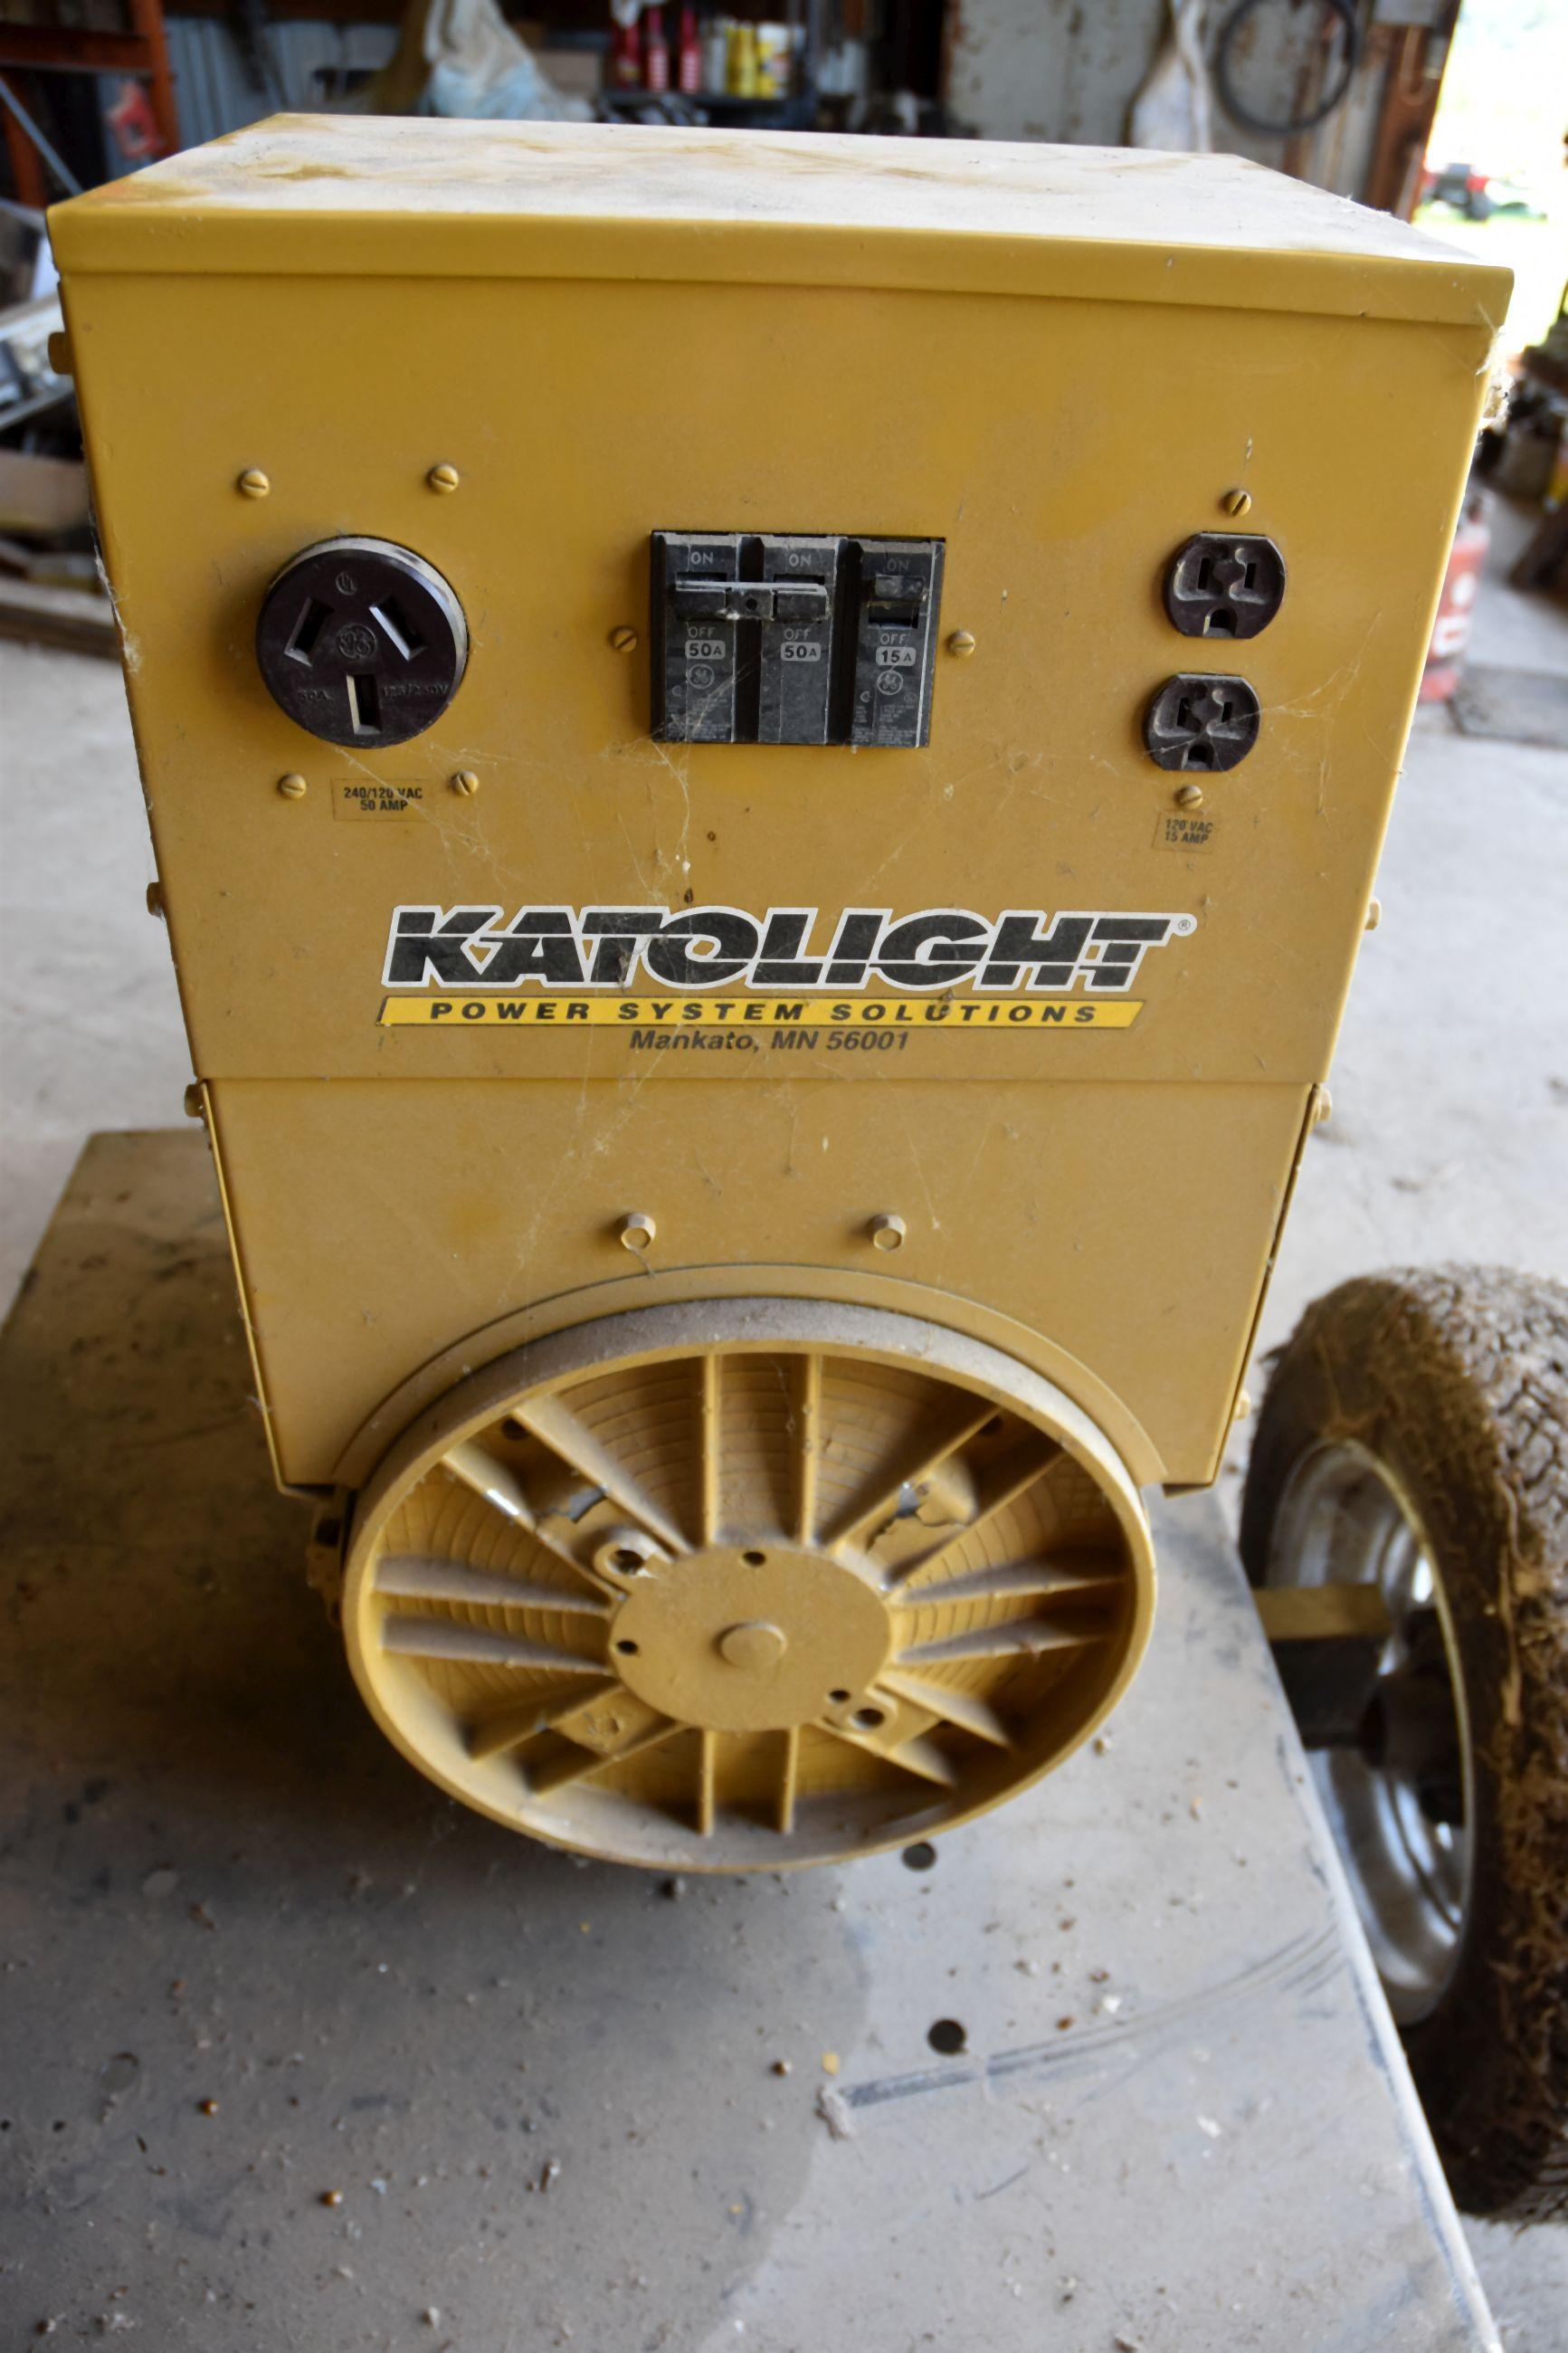 Katolight KLSI-25 PTO Generator, 25KW, 540 PTO, Single Phase, On Trailer, Like New